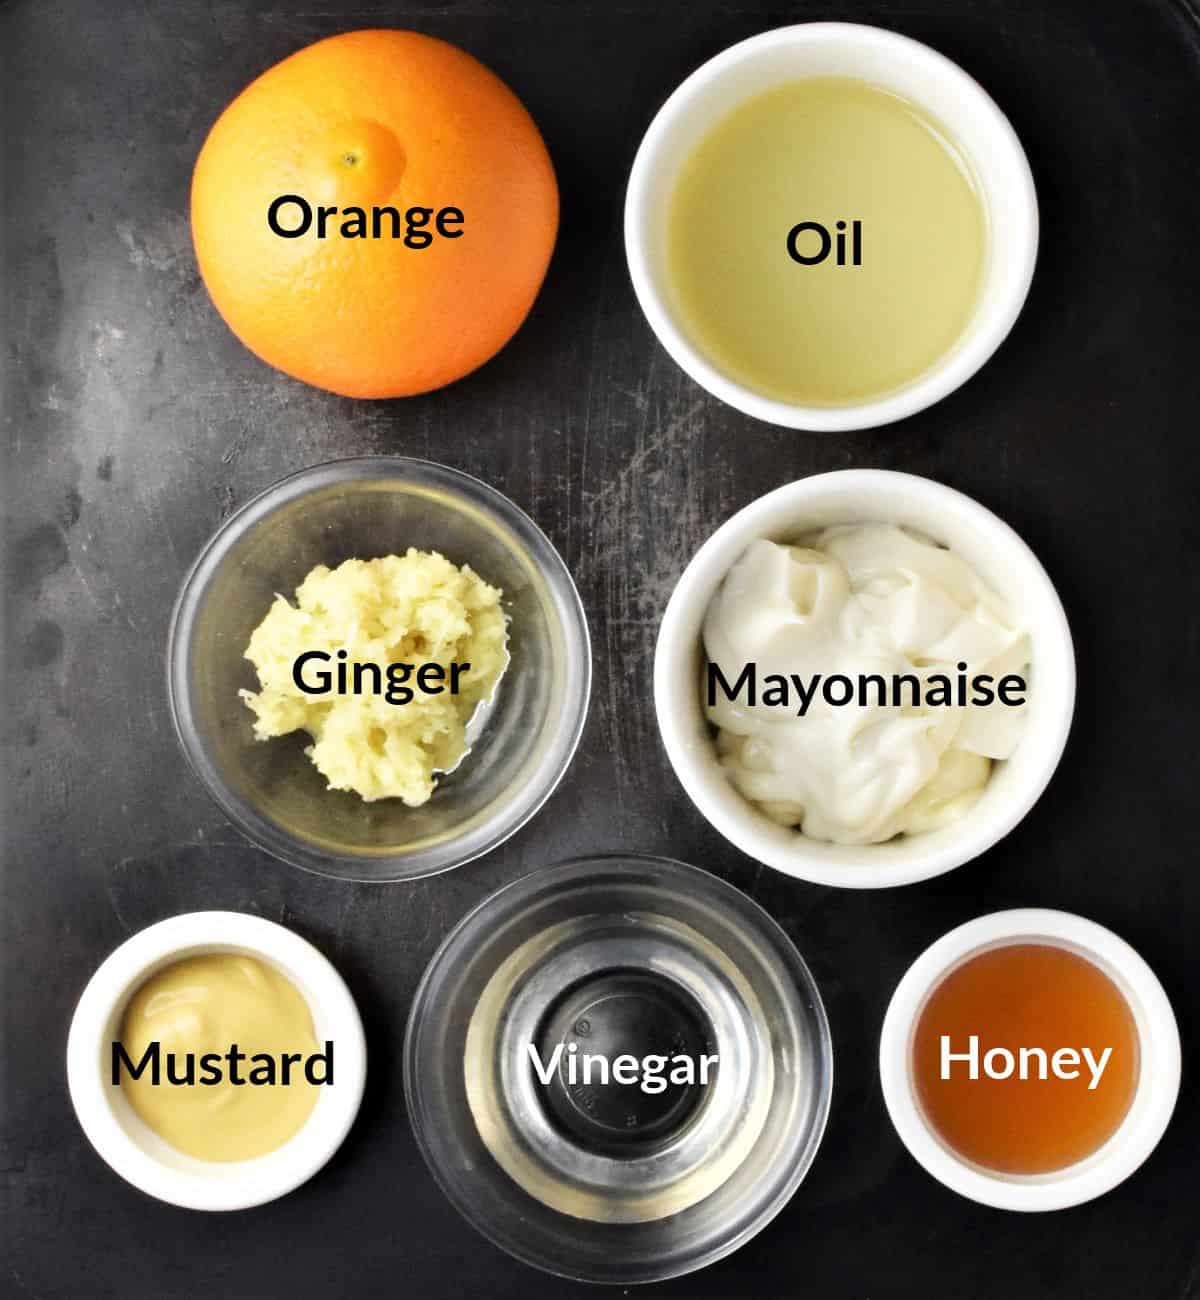 Ingredients for making orange salad dressing in individual dishes.